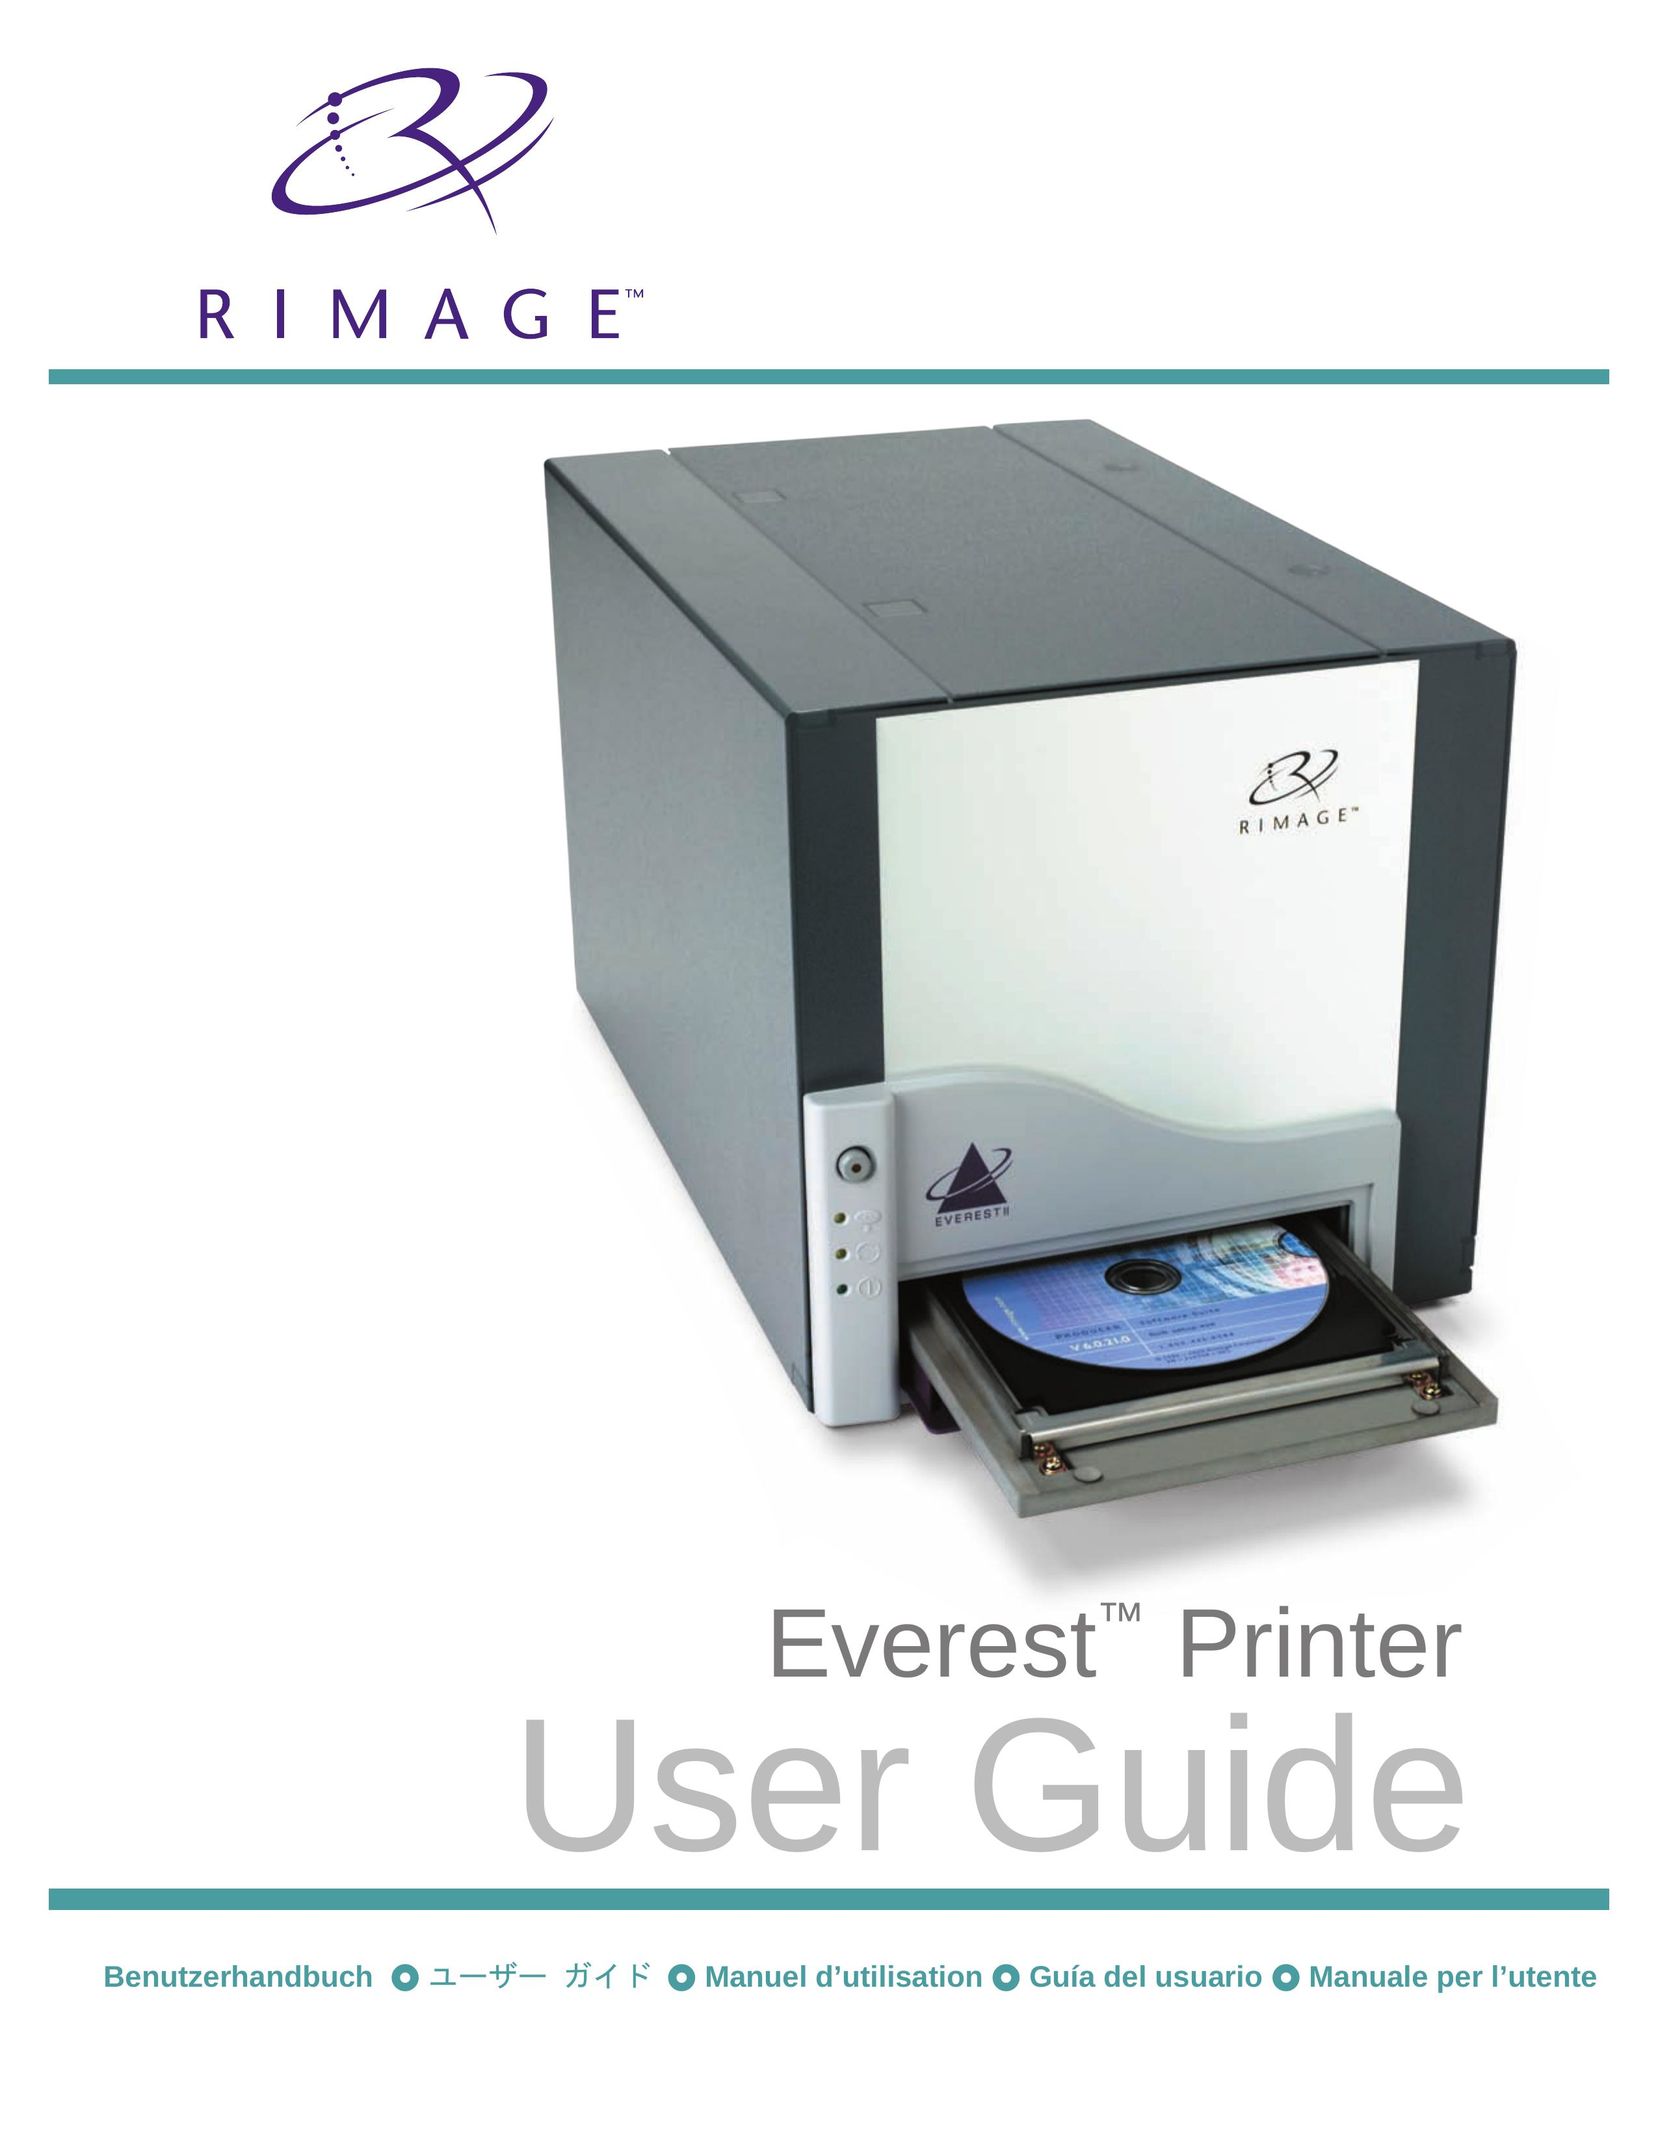 Rimage EverestTM Printer Printer User Manual